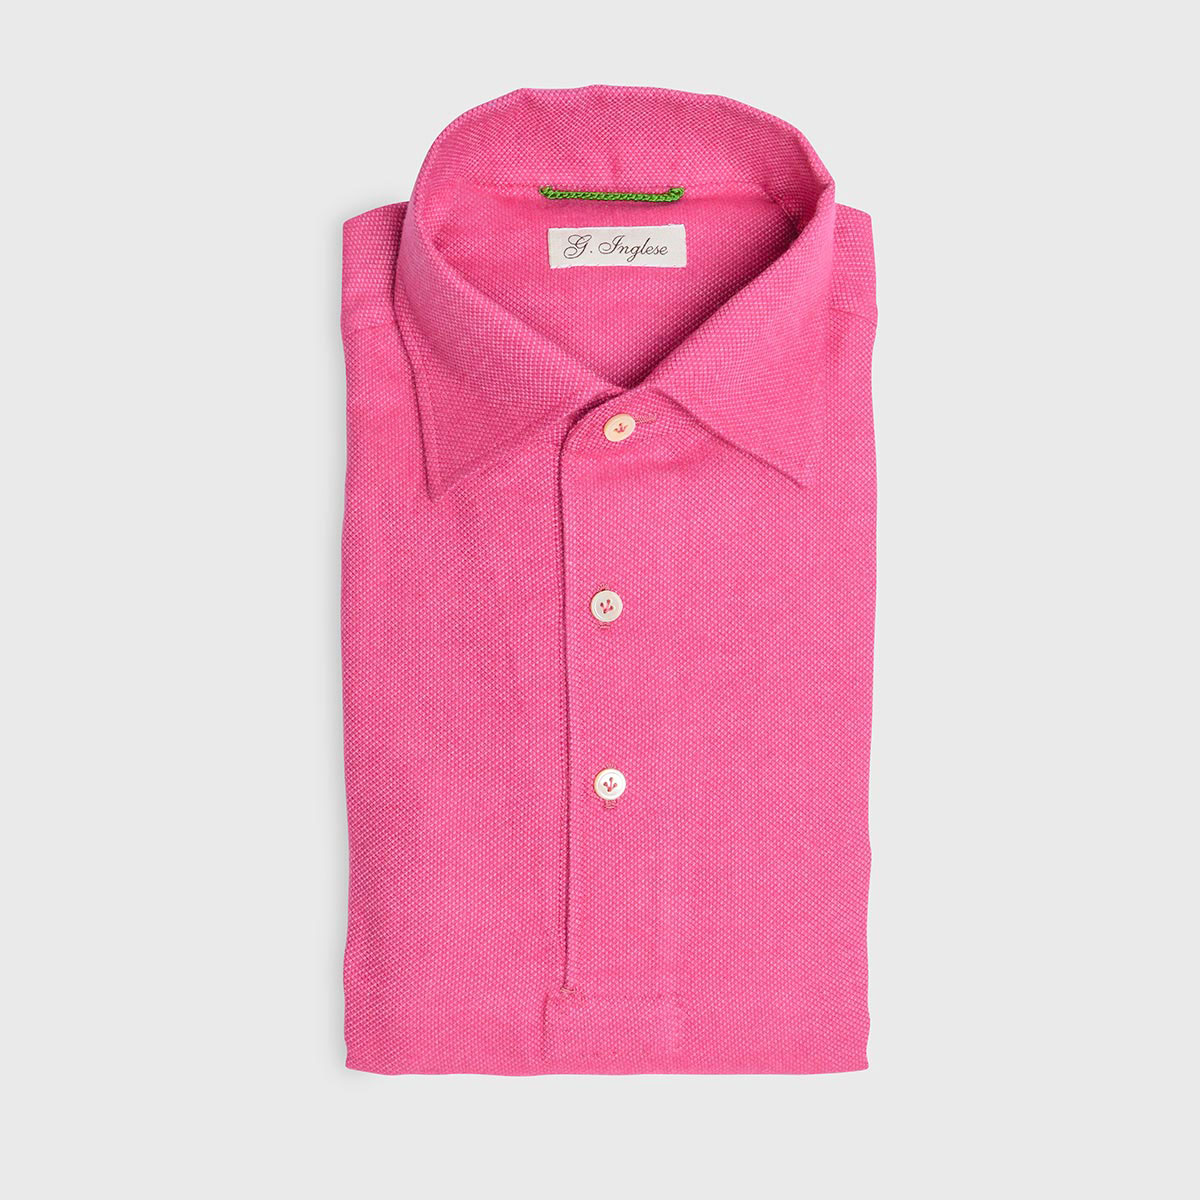 Mastroianni Fucxia Cotton Flannel Polo Shirt G. Inglese on sale 2022